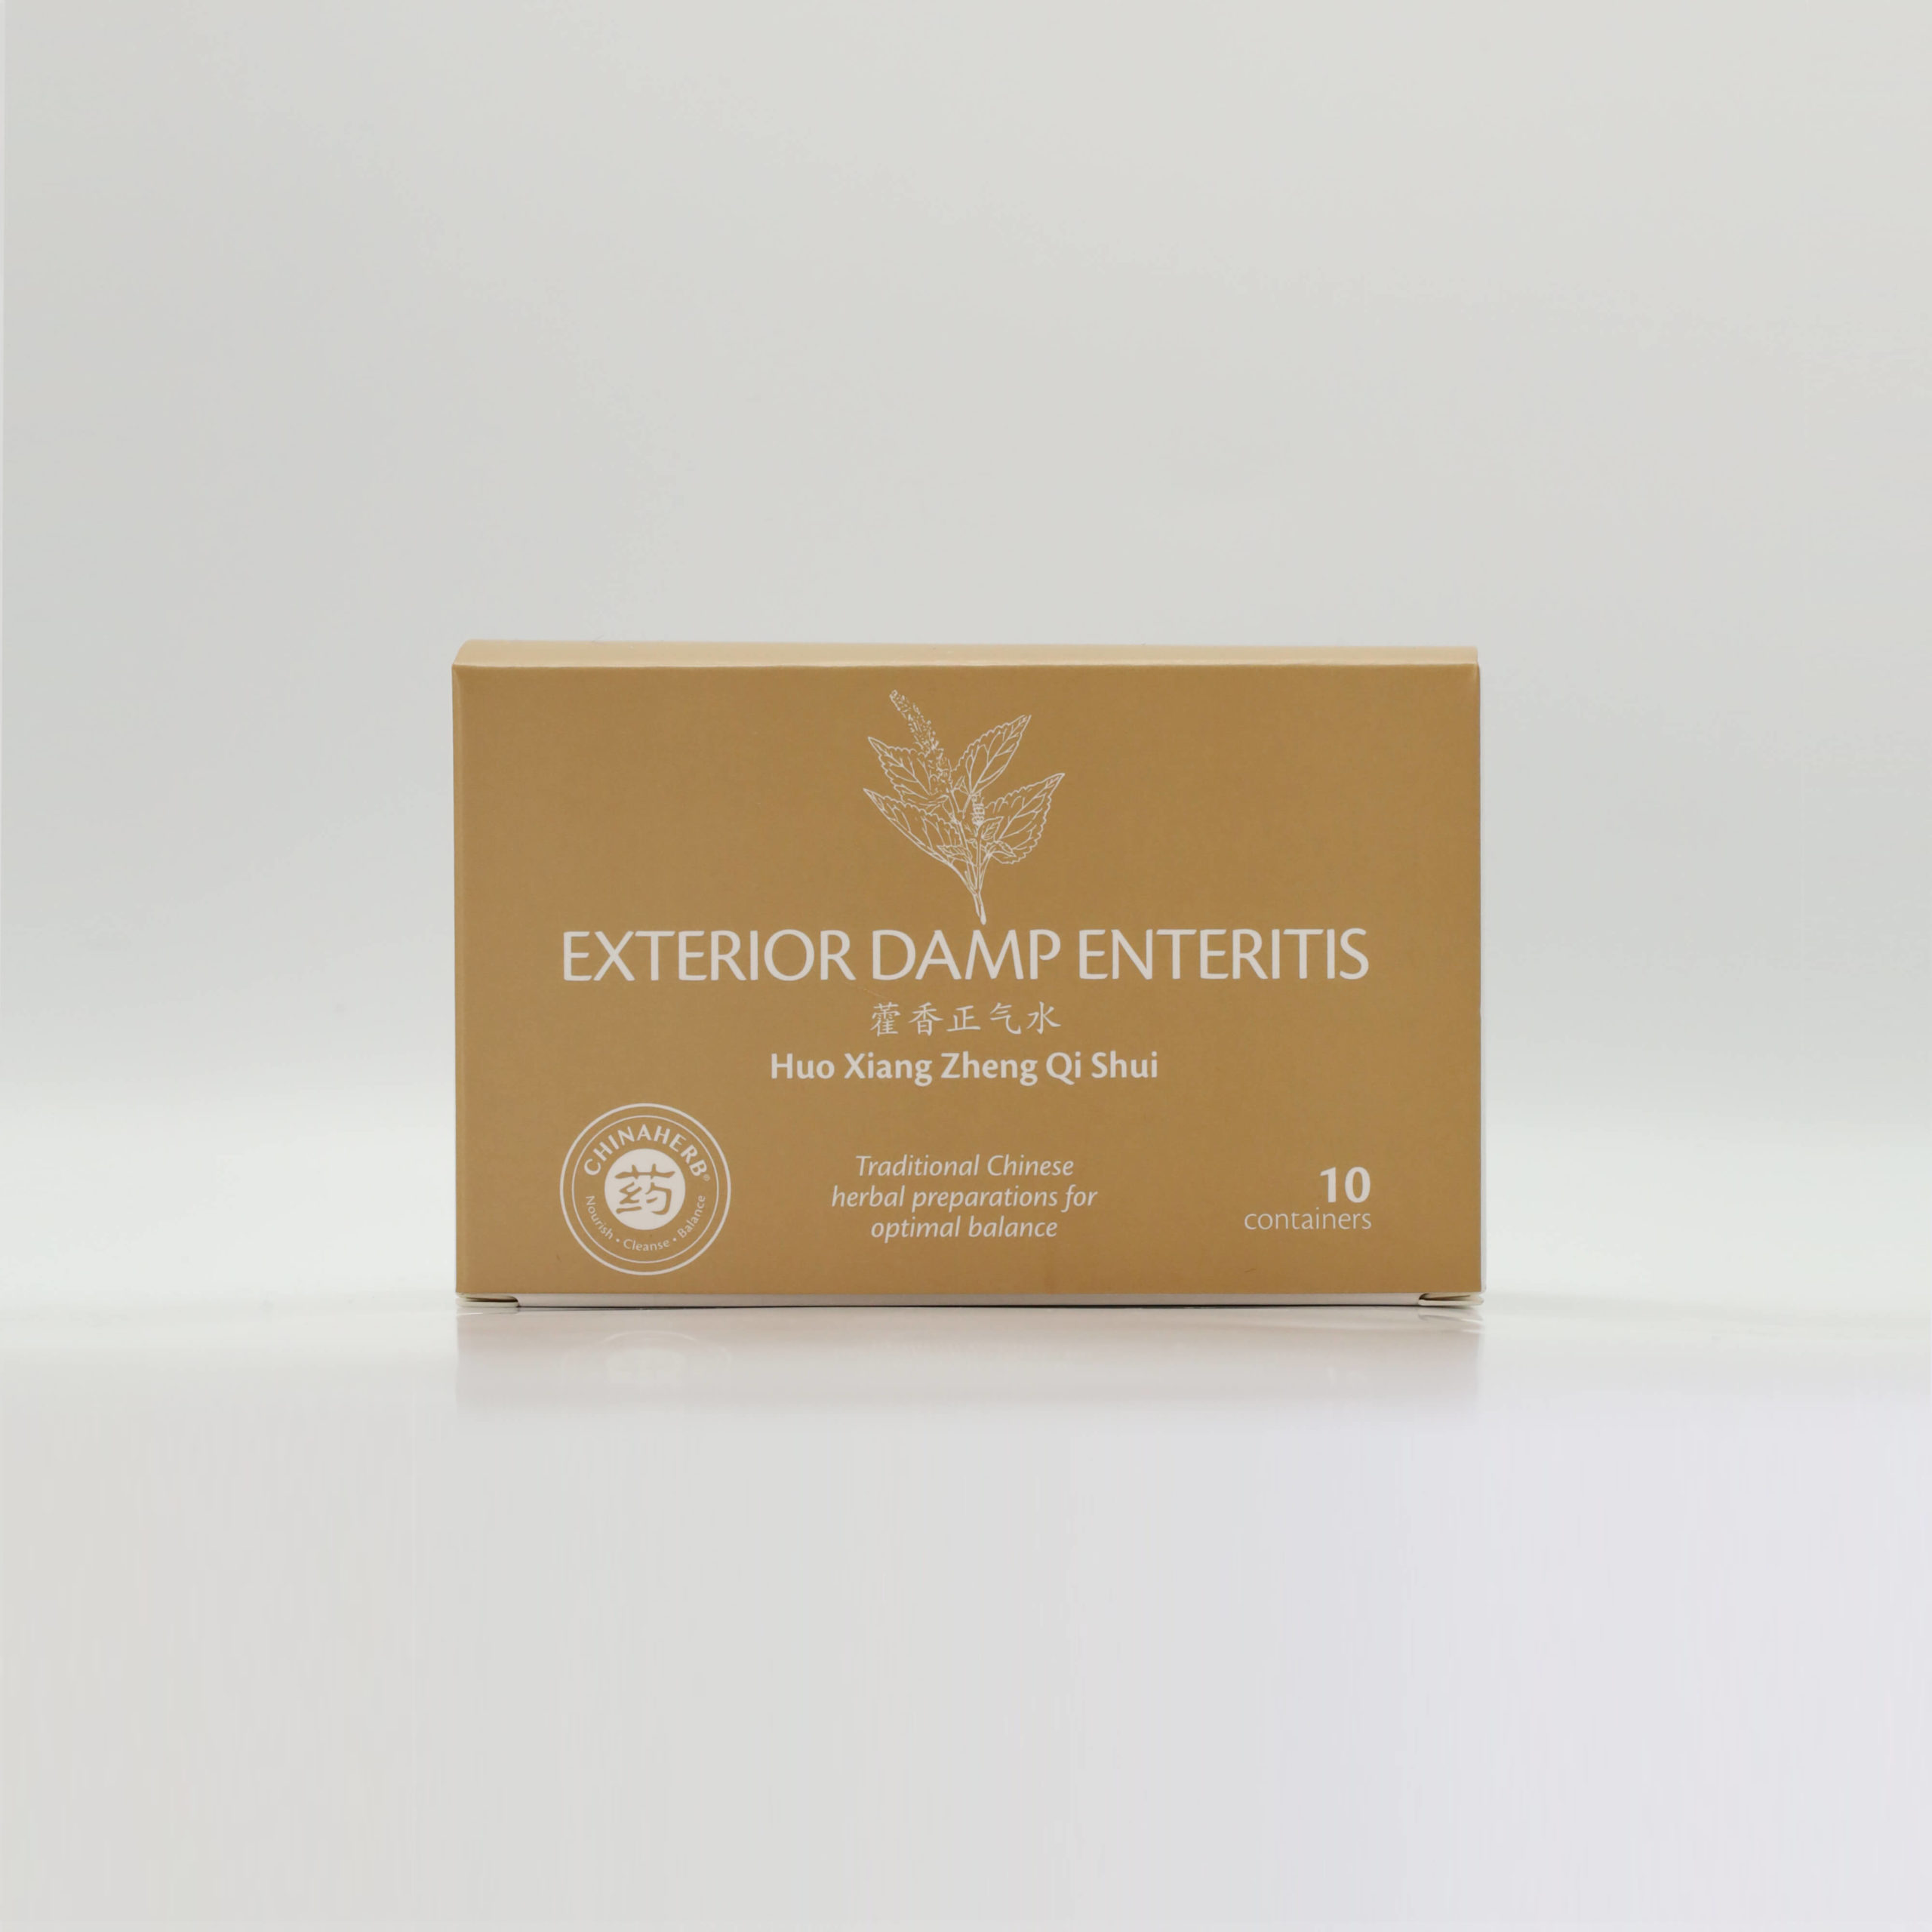 External Damp Enteritis